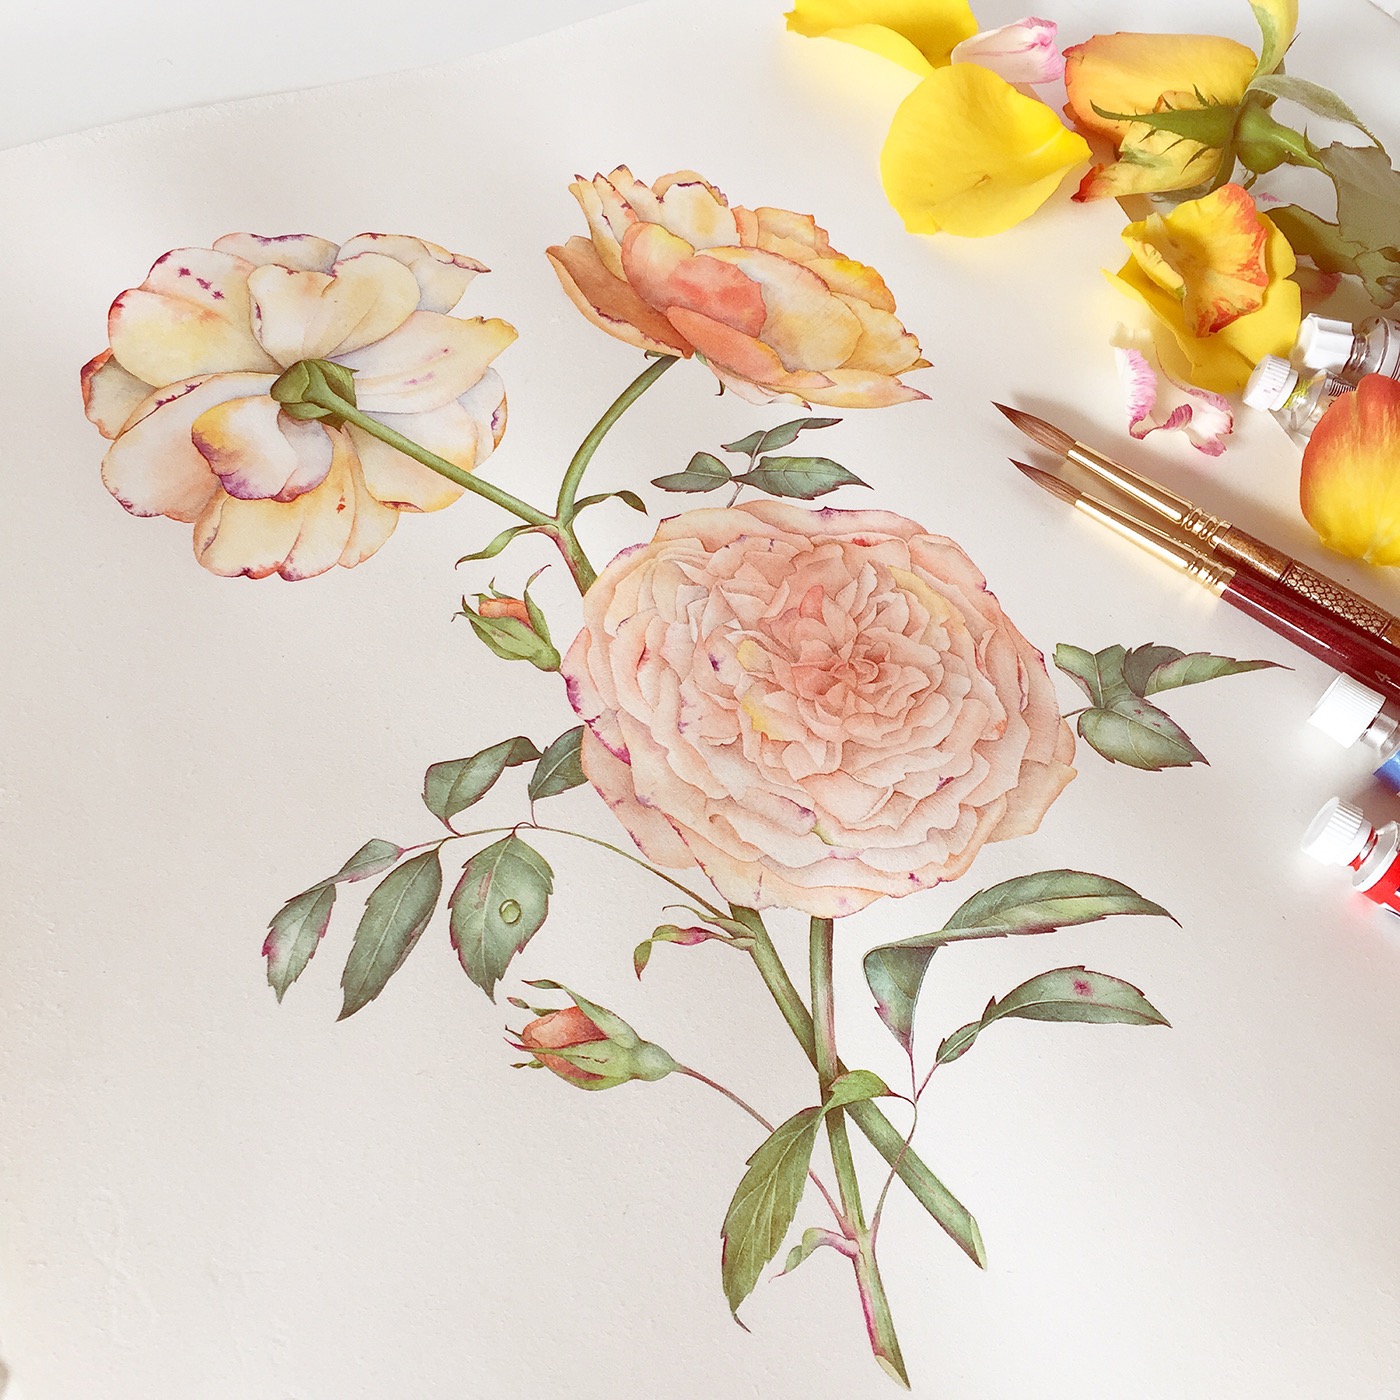 English Rose watercolor illustration on Behance